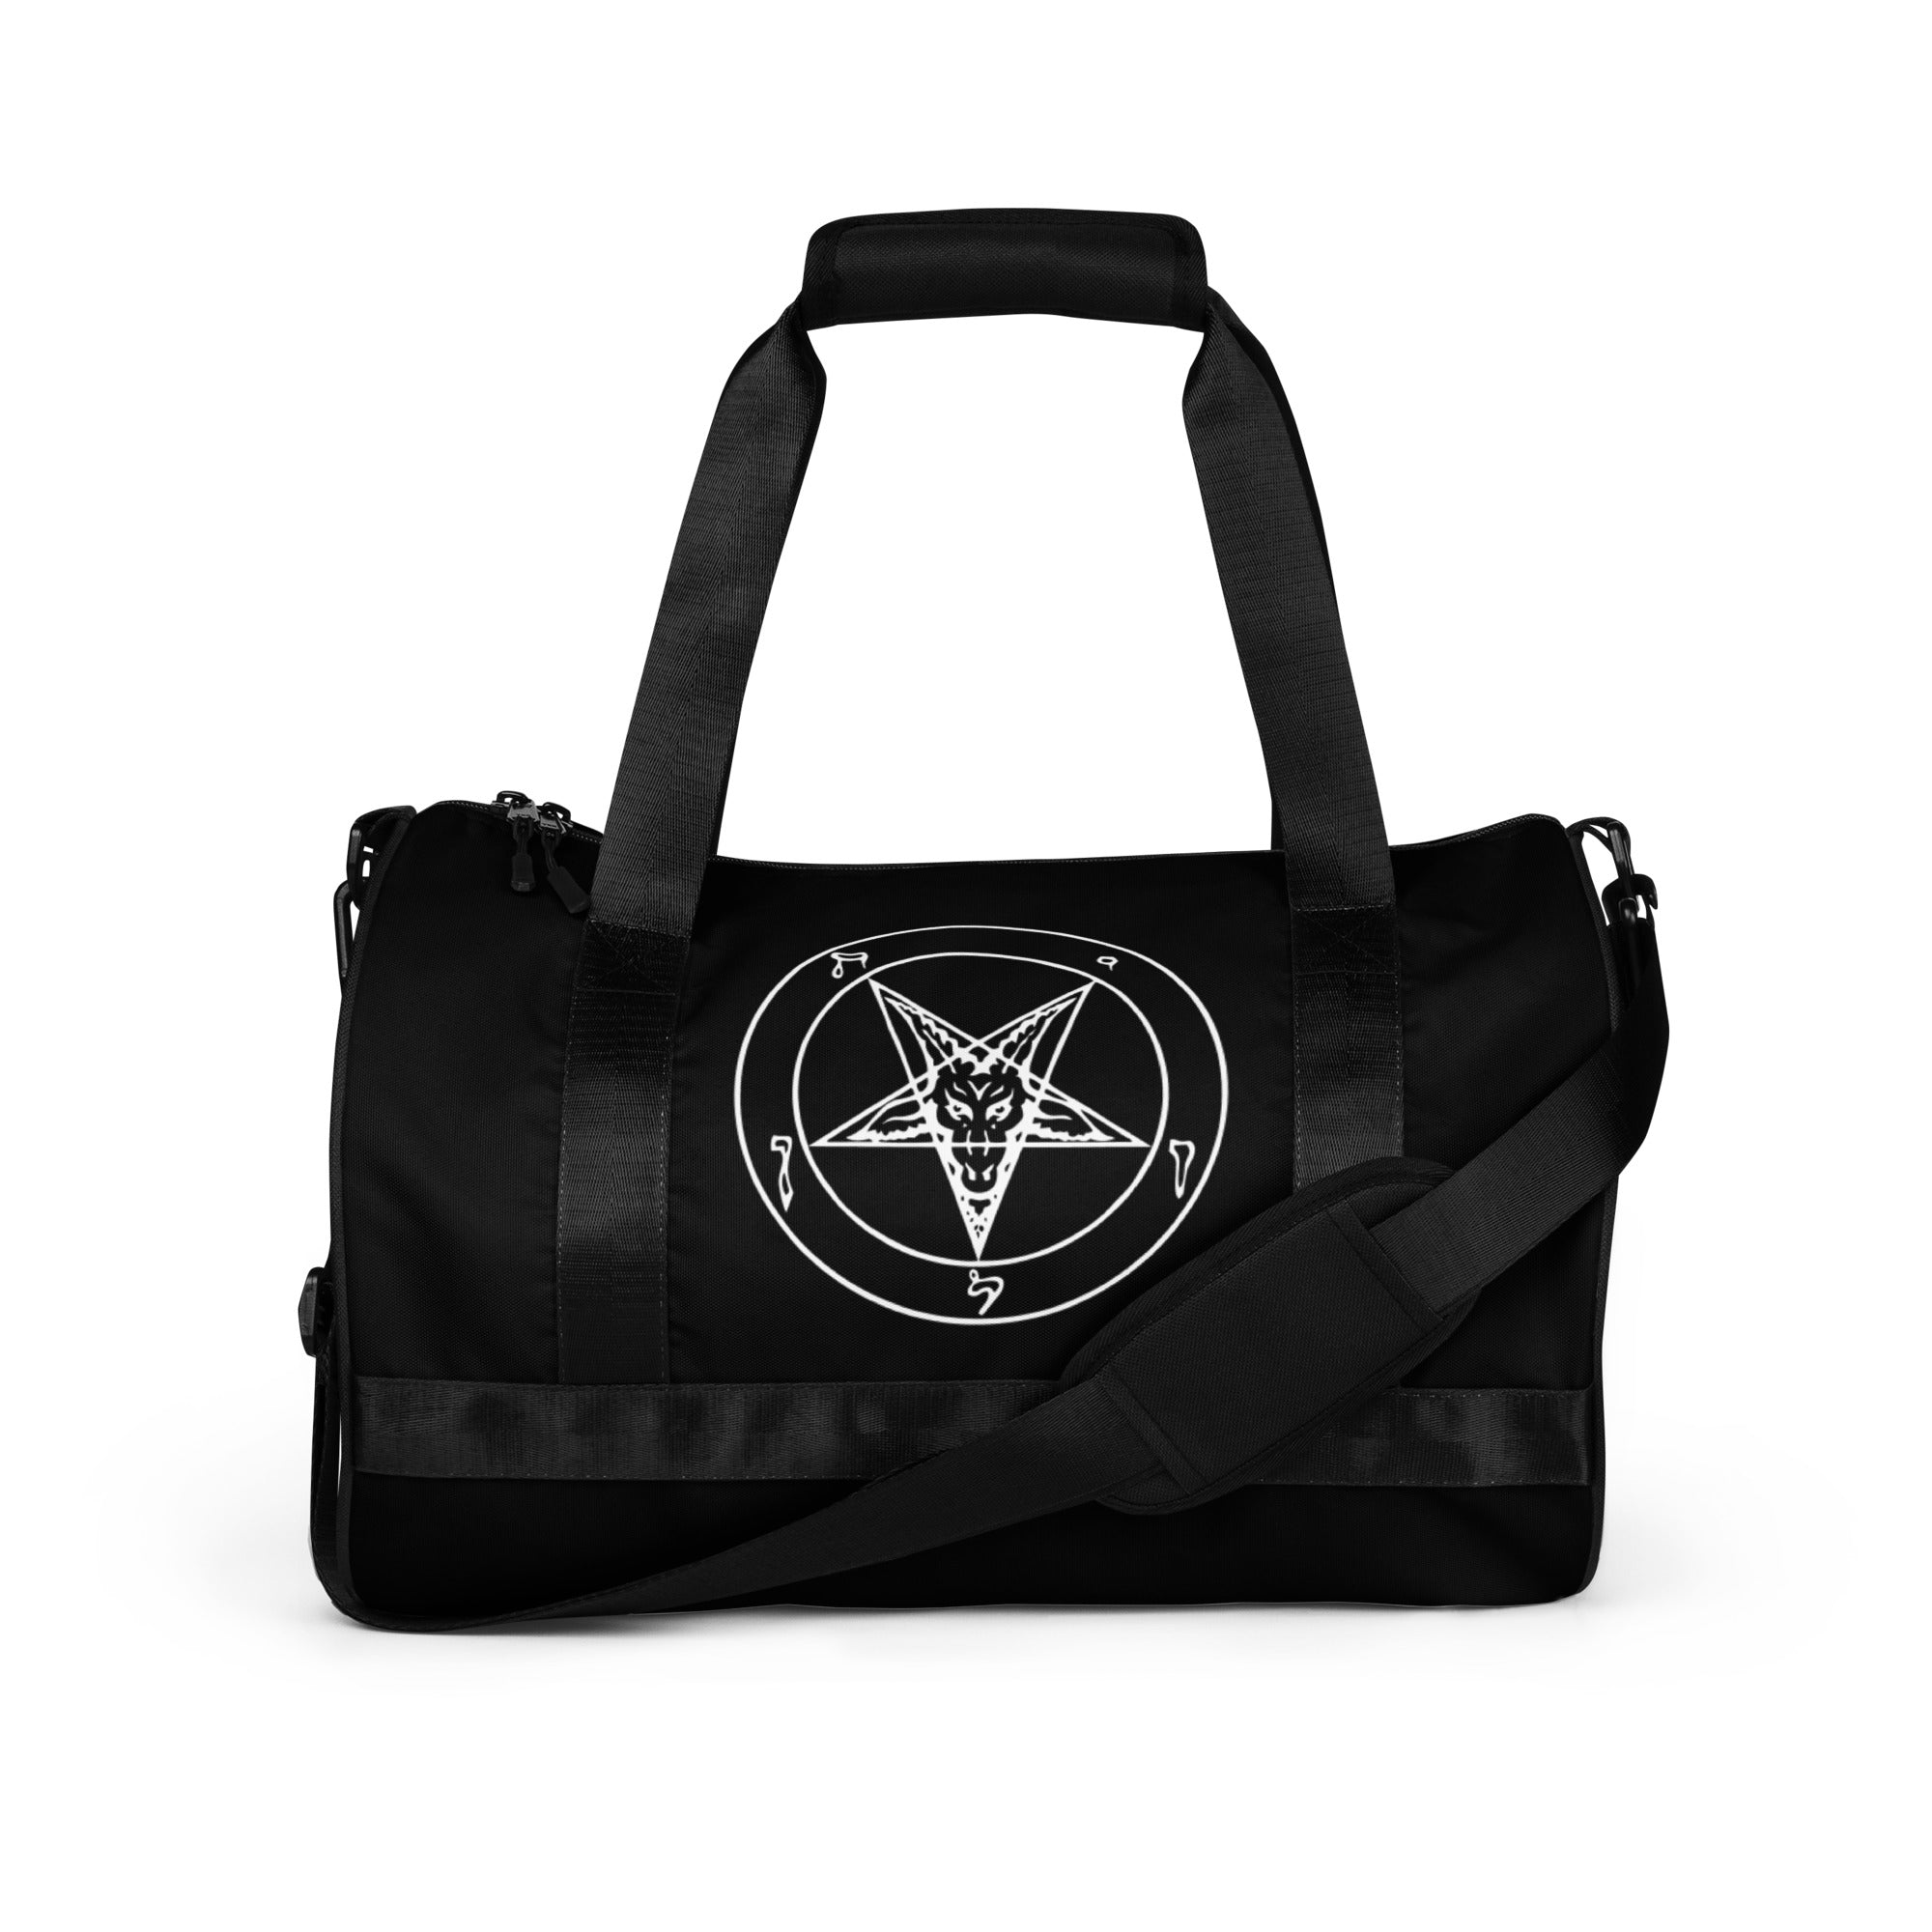 Hail Satan! Sigil of Baphomet Symbol on Black Gym Bag / Duffle Bag - Edge of Life Designs